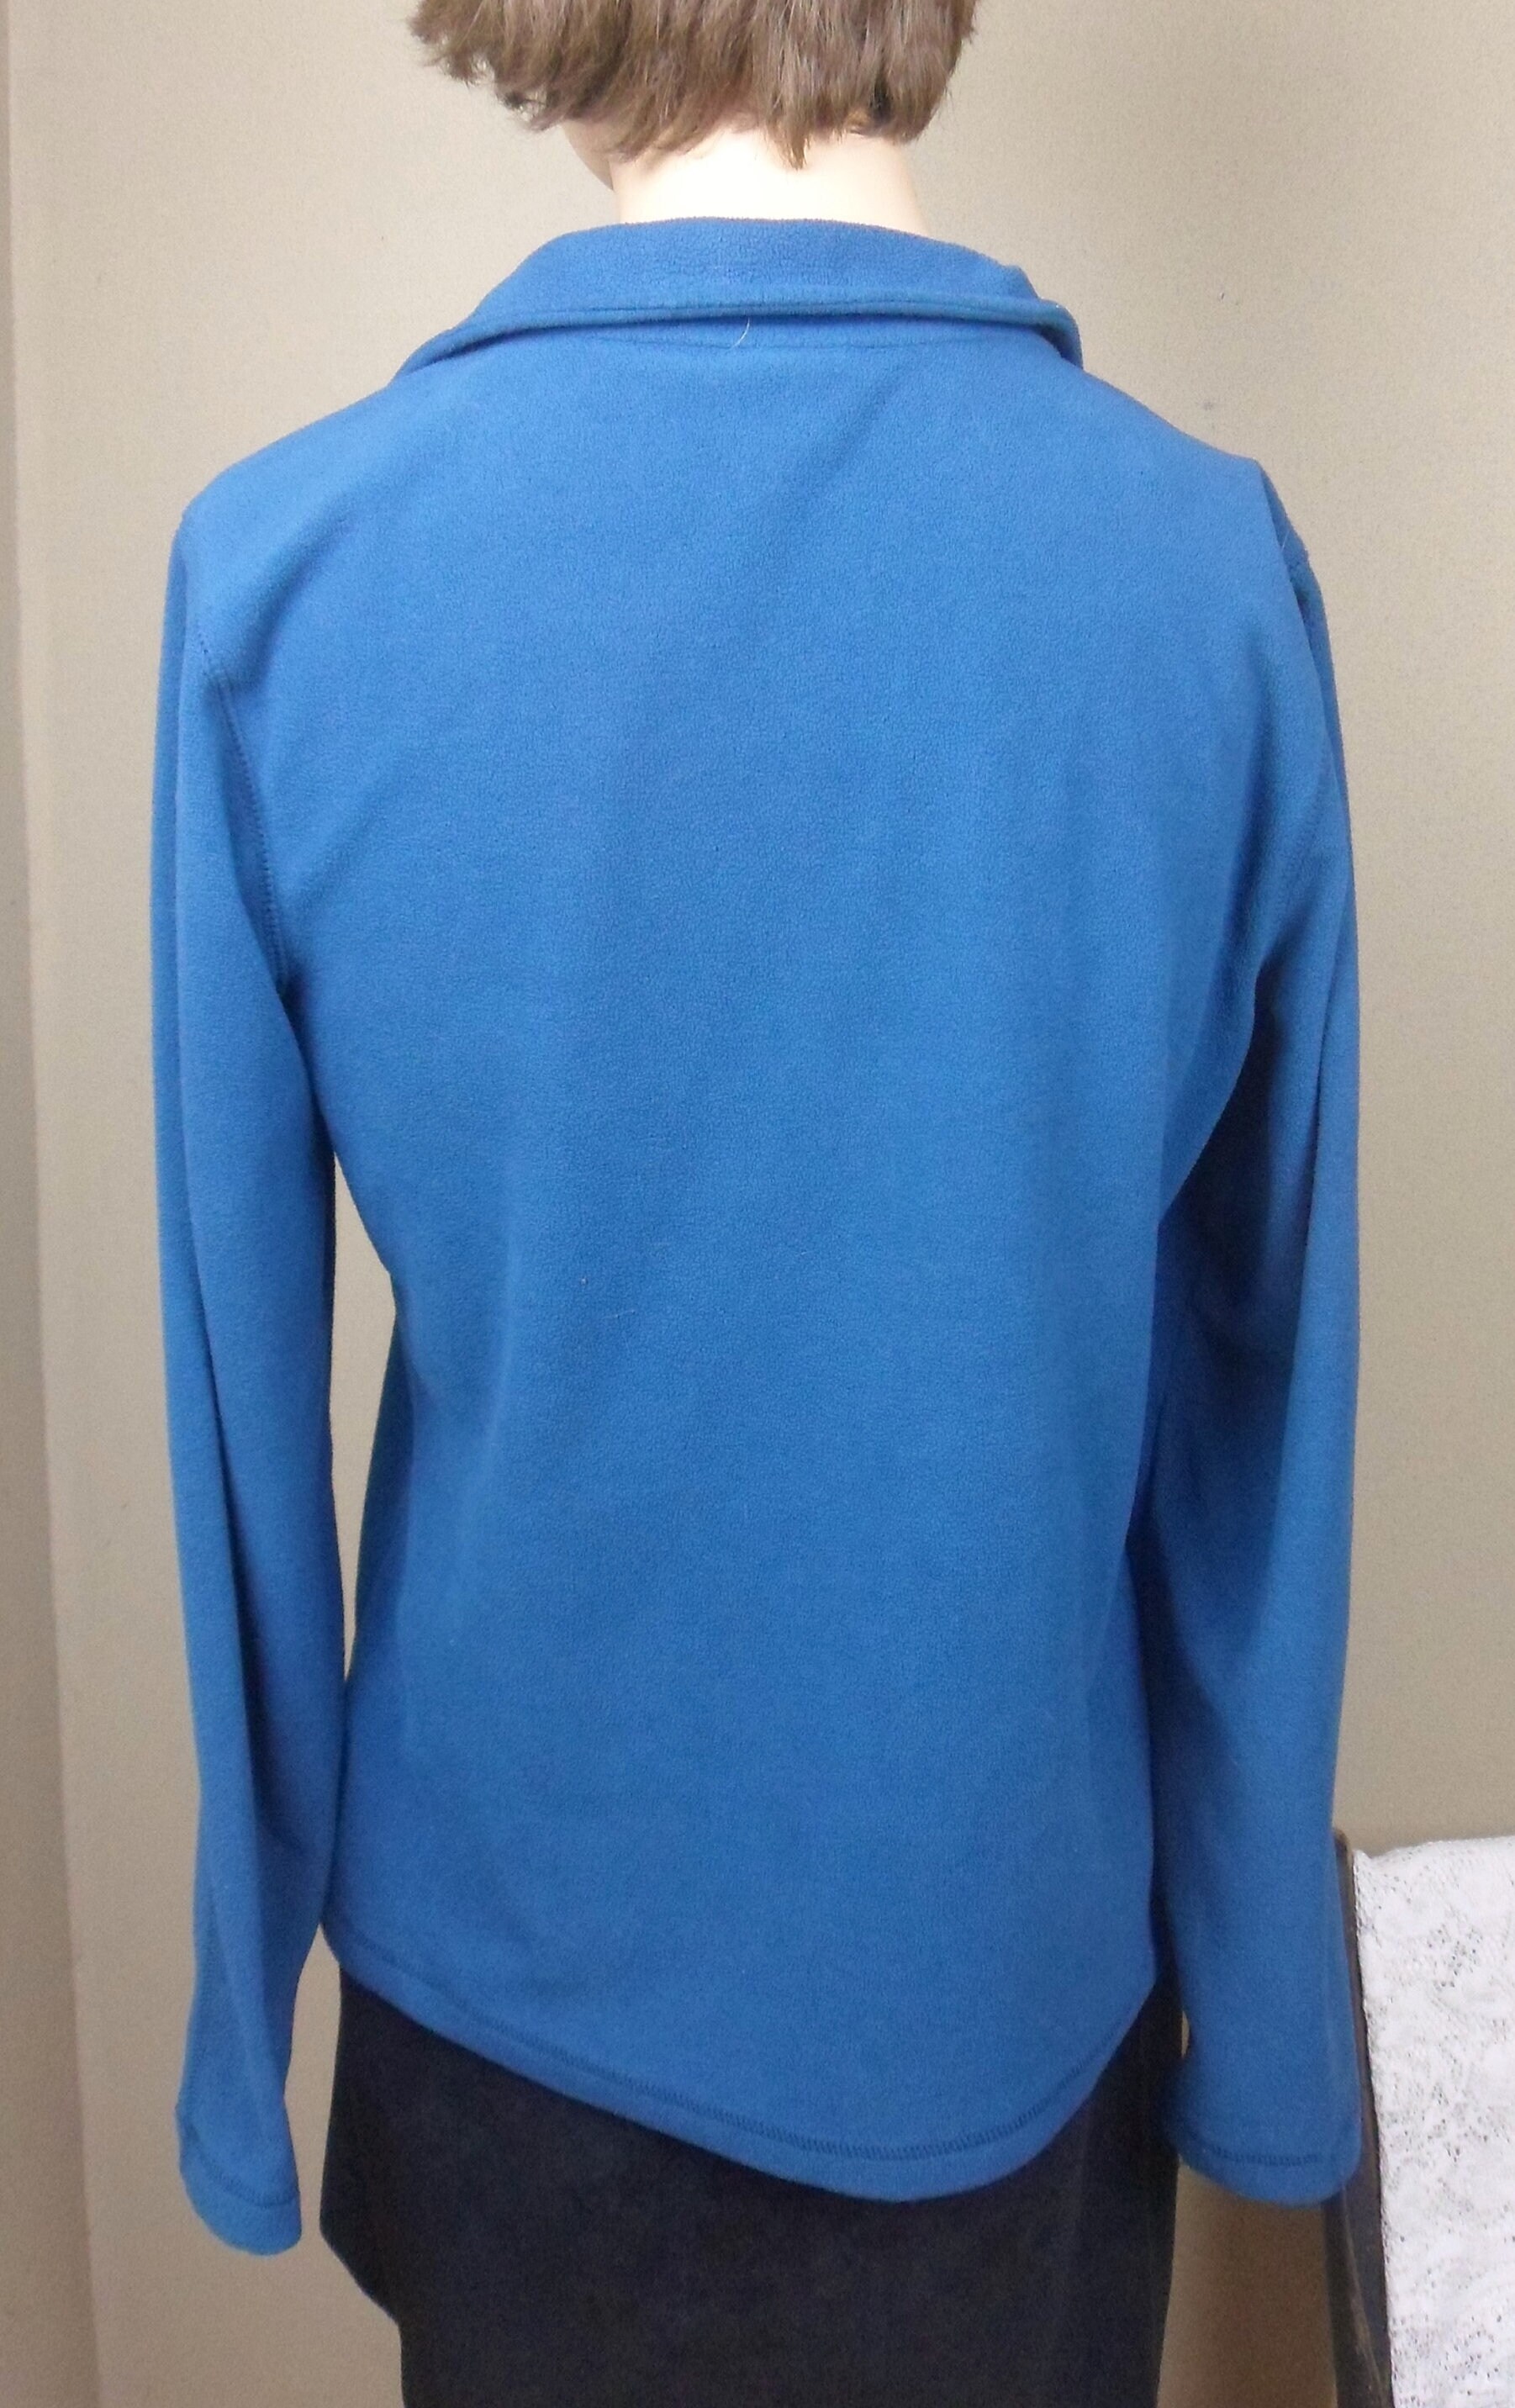 Danskin Now Blue Exercise Jacket, Vintage Workout Zipper Jacket, Size S 